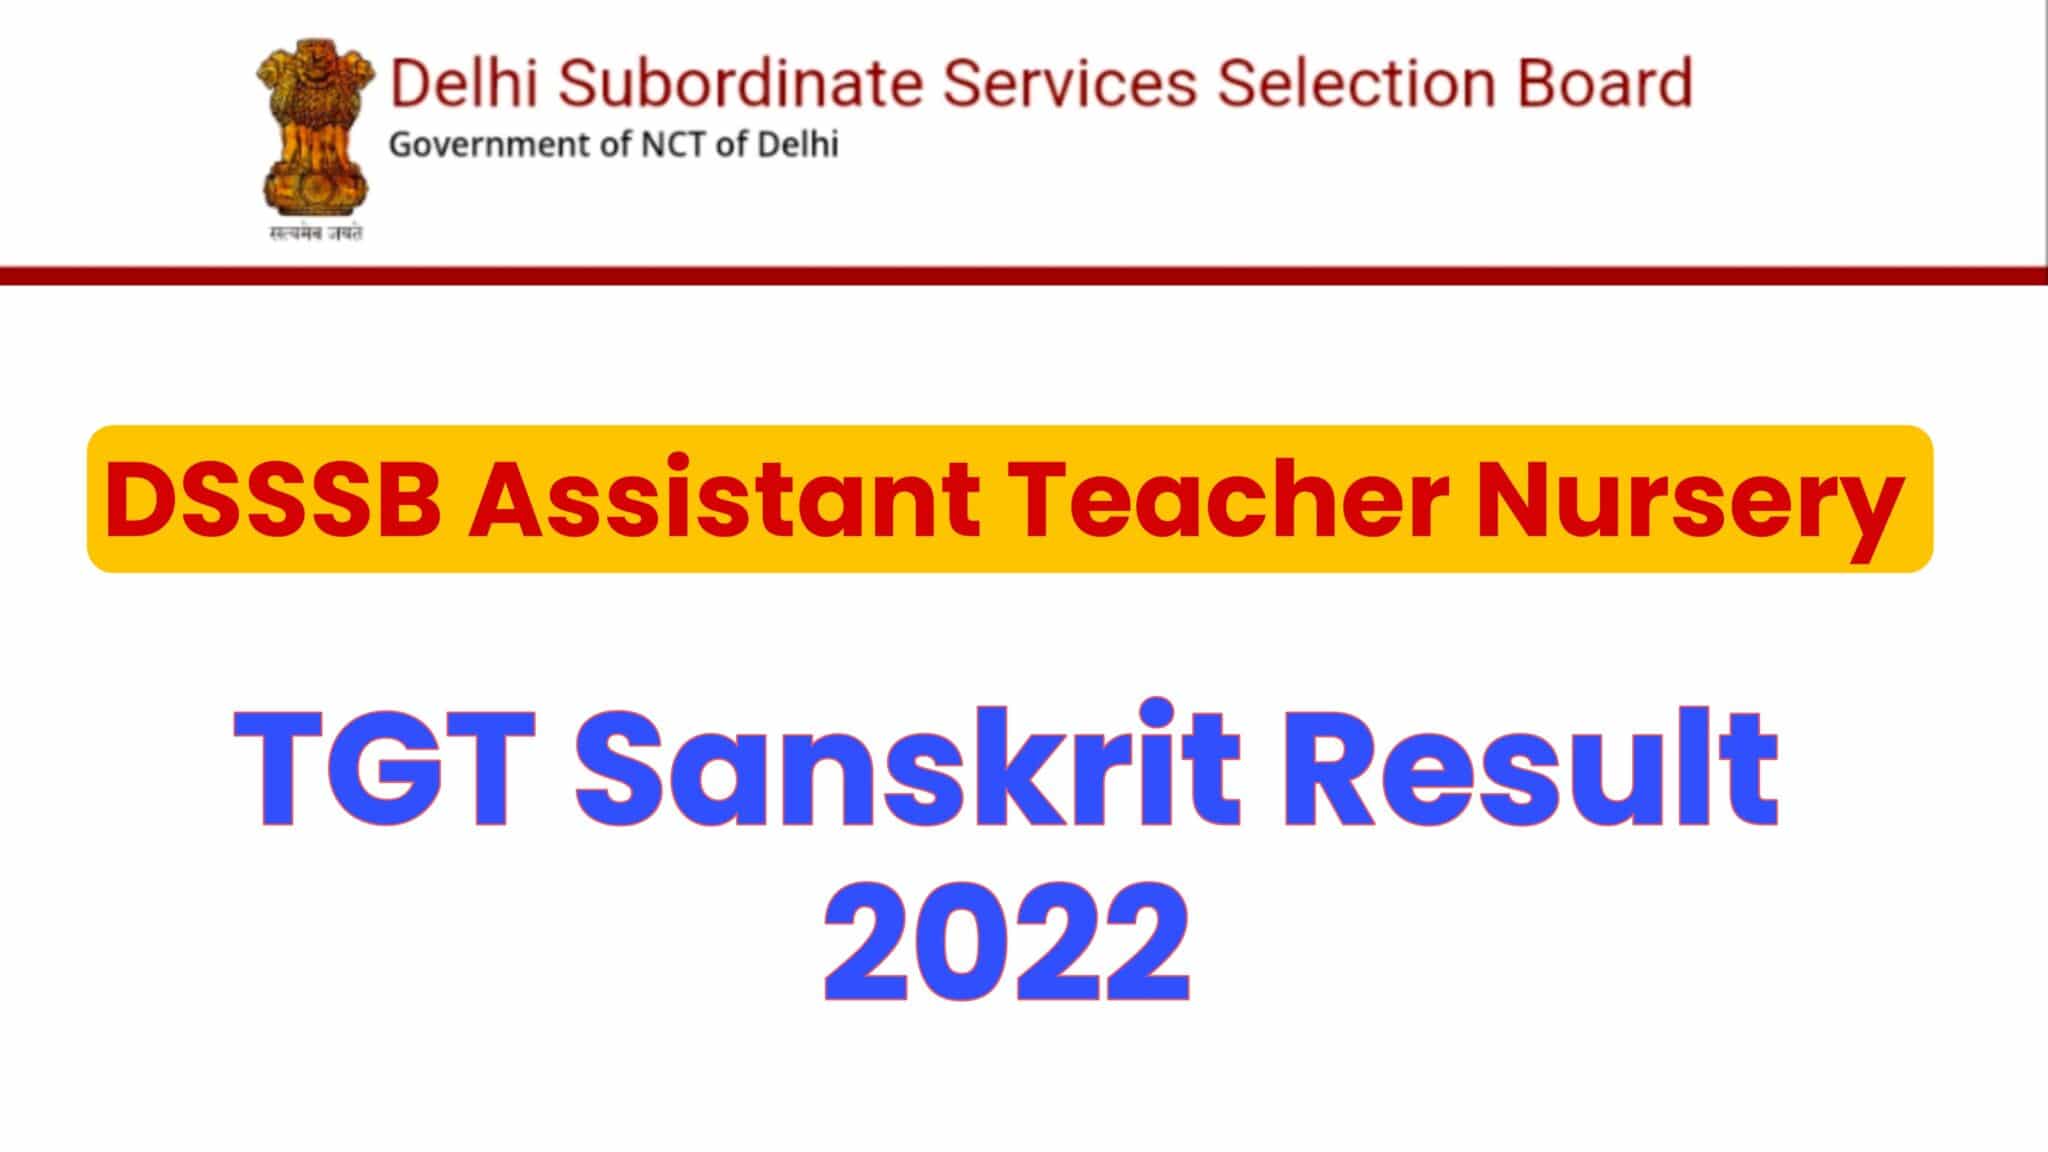 DSSSB Assistant Teacher Nursery, TGT Sanskrit Result 2022